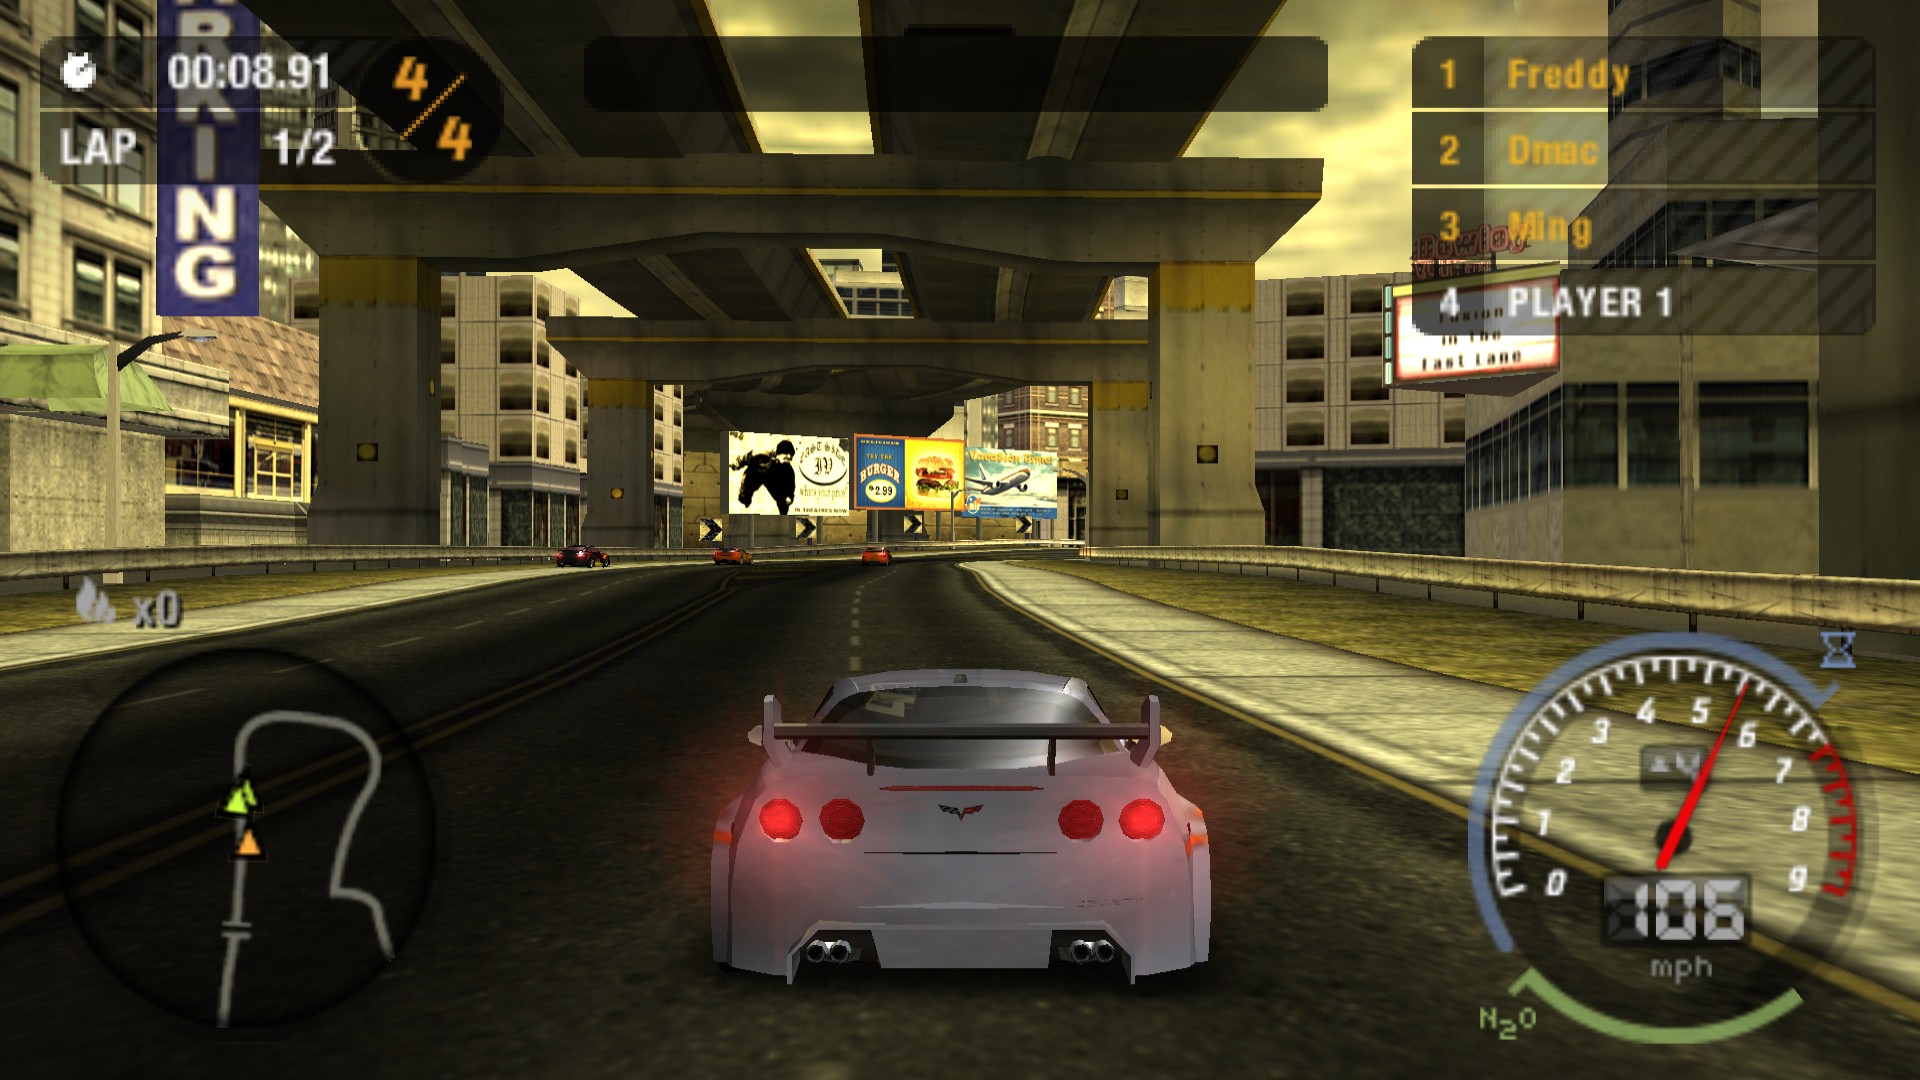 1.0 0 игры. Need of Speed most wanted 2005 ПСП. Need for Speed most wanted 5-1-0 PSP. Need for Speed most wanted на ПСП. Most wanted 2005 PSP.